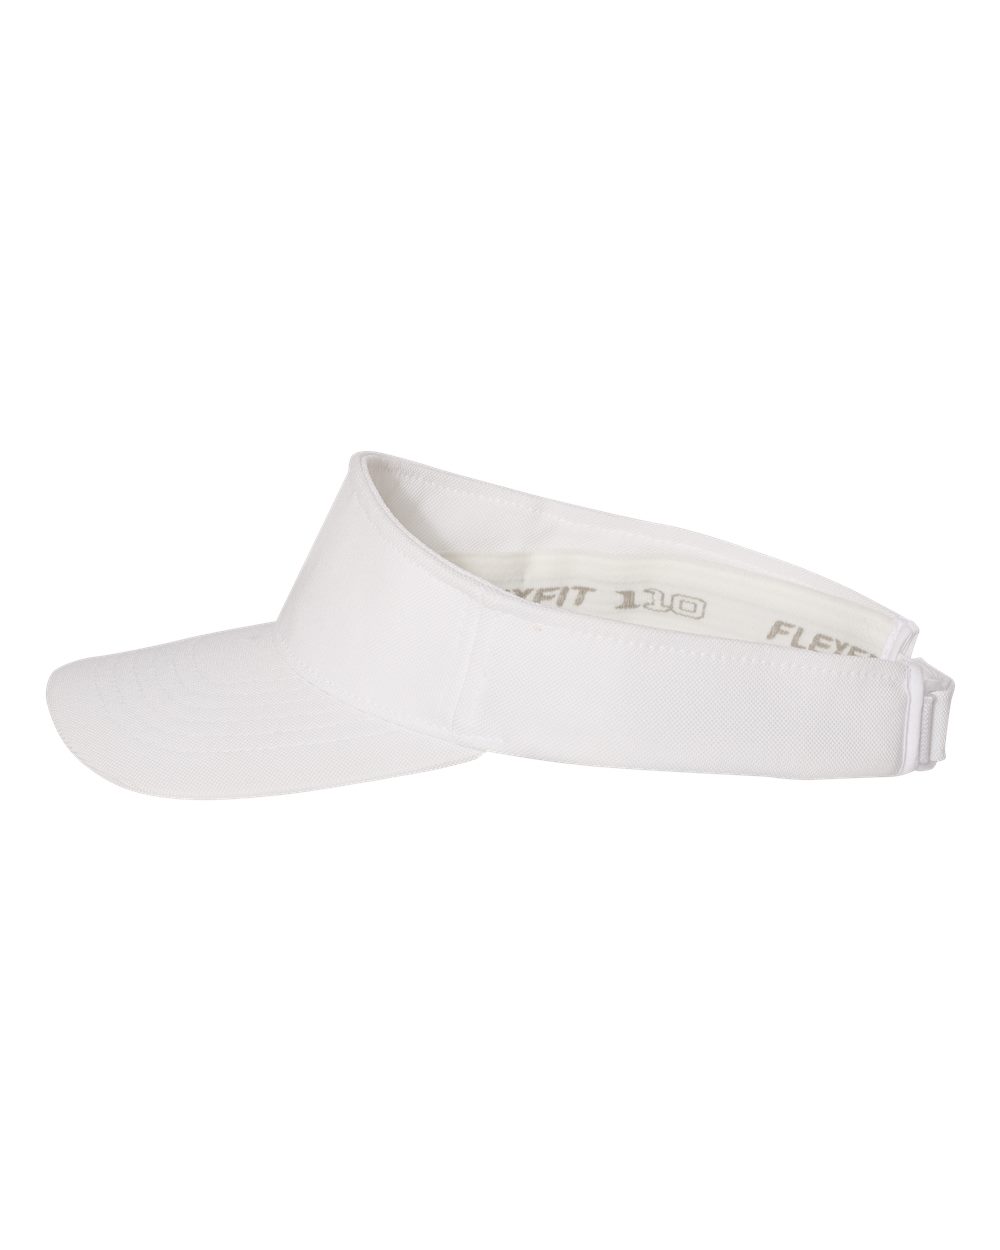 110® Comfort Fit Visor - 8110-Flexfit